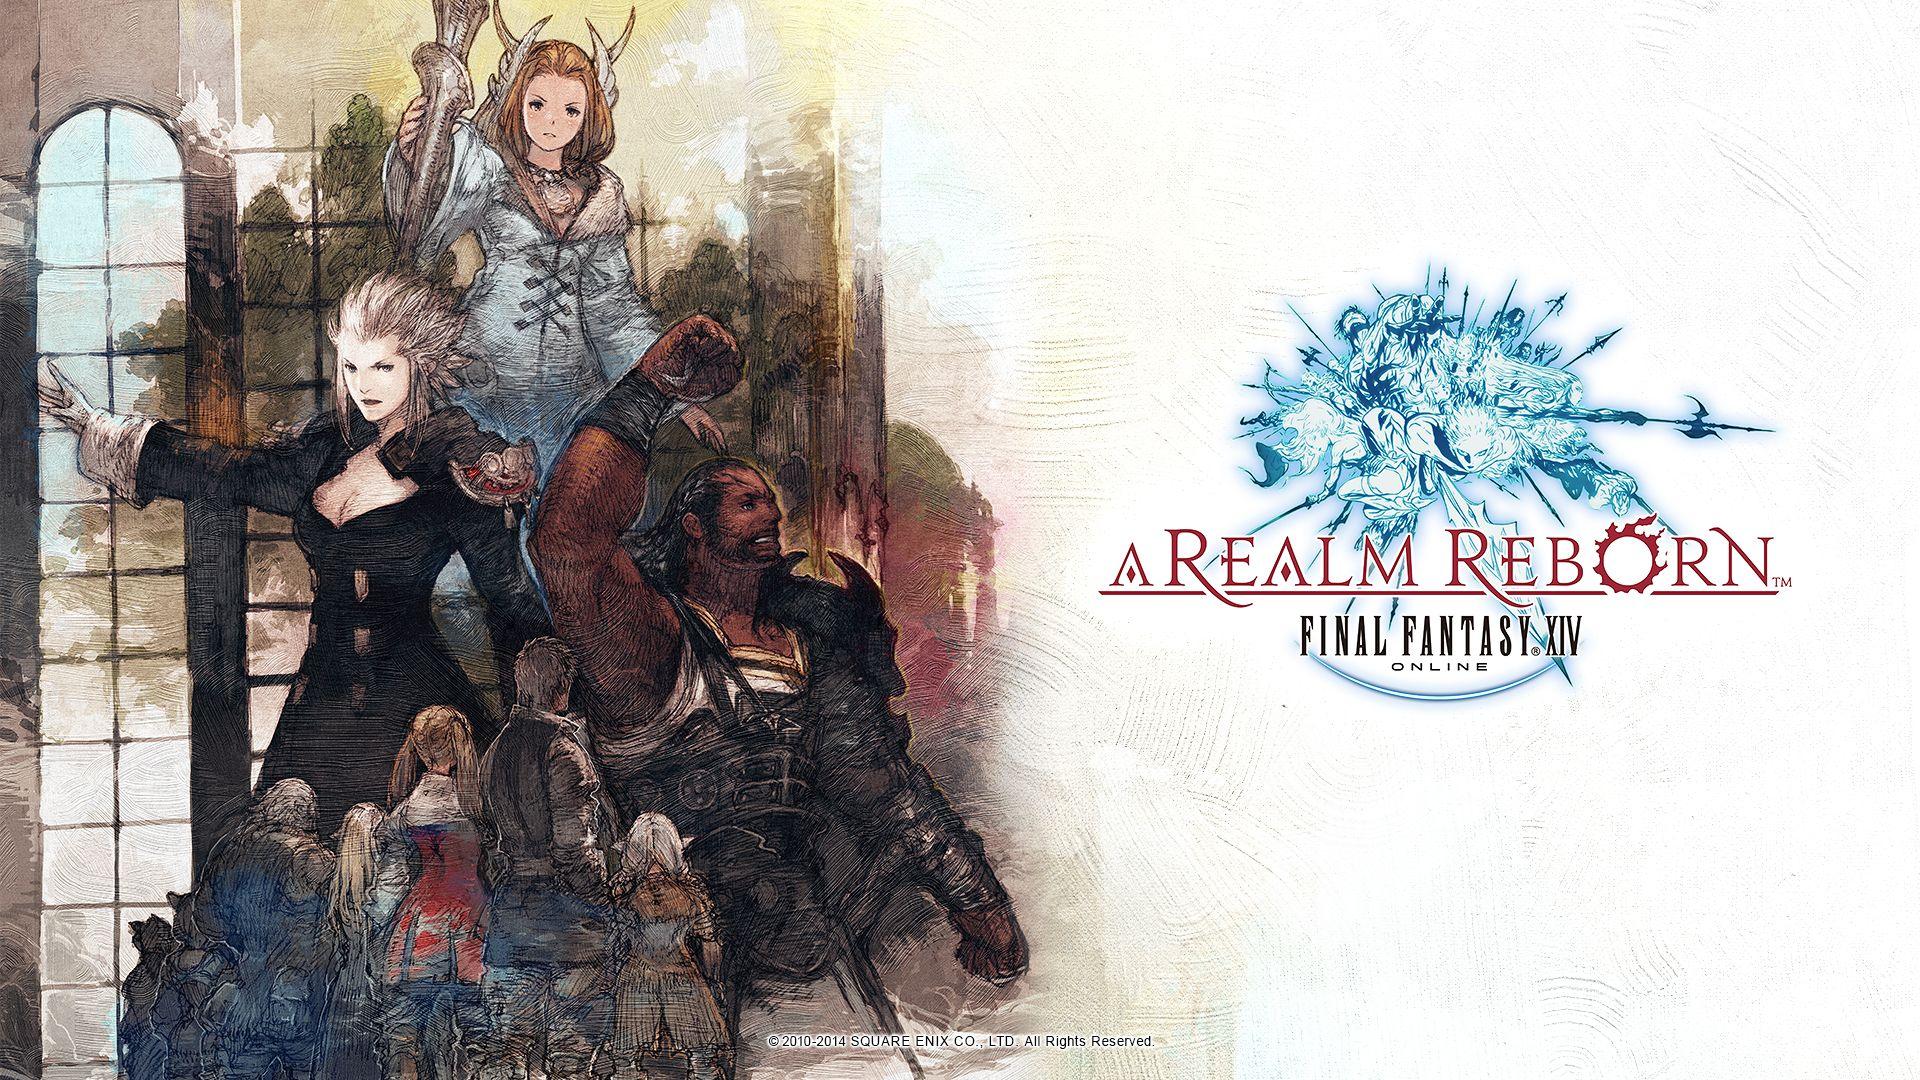 Final Fantasy XIV: A Realm Reborn. Wallpaper. The Final Fantasy